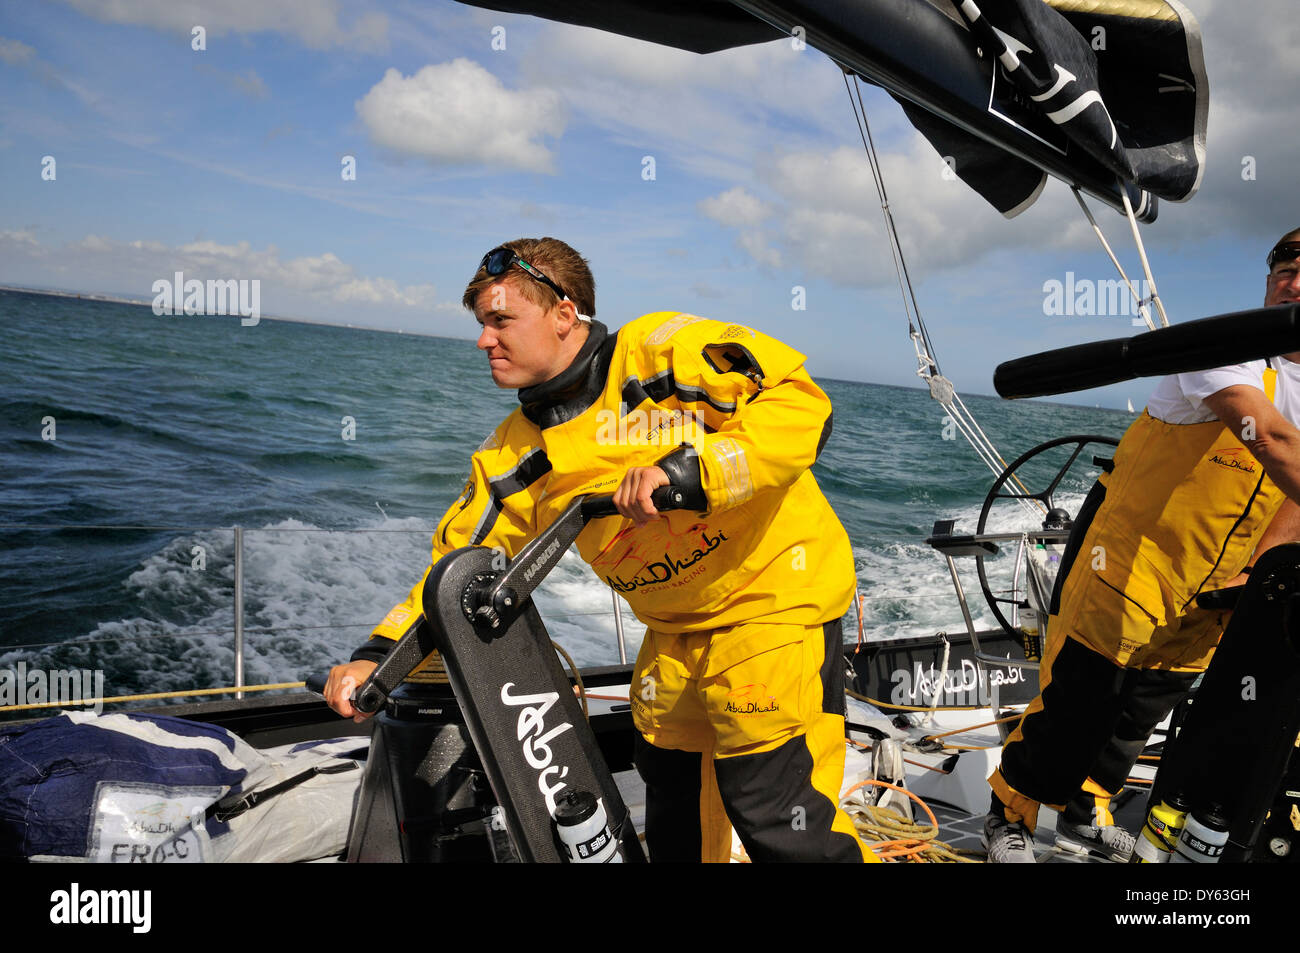 Crewman in full weather gear winch grinding aboard ocean racing yacht Stock Photo